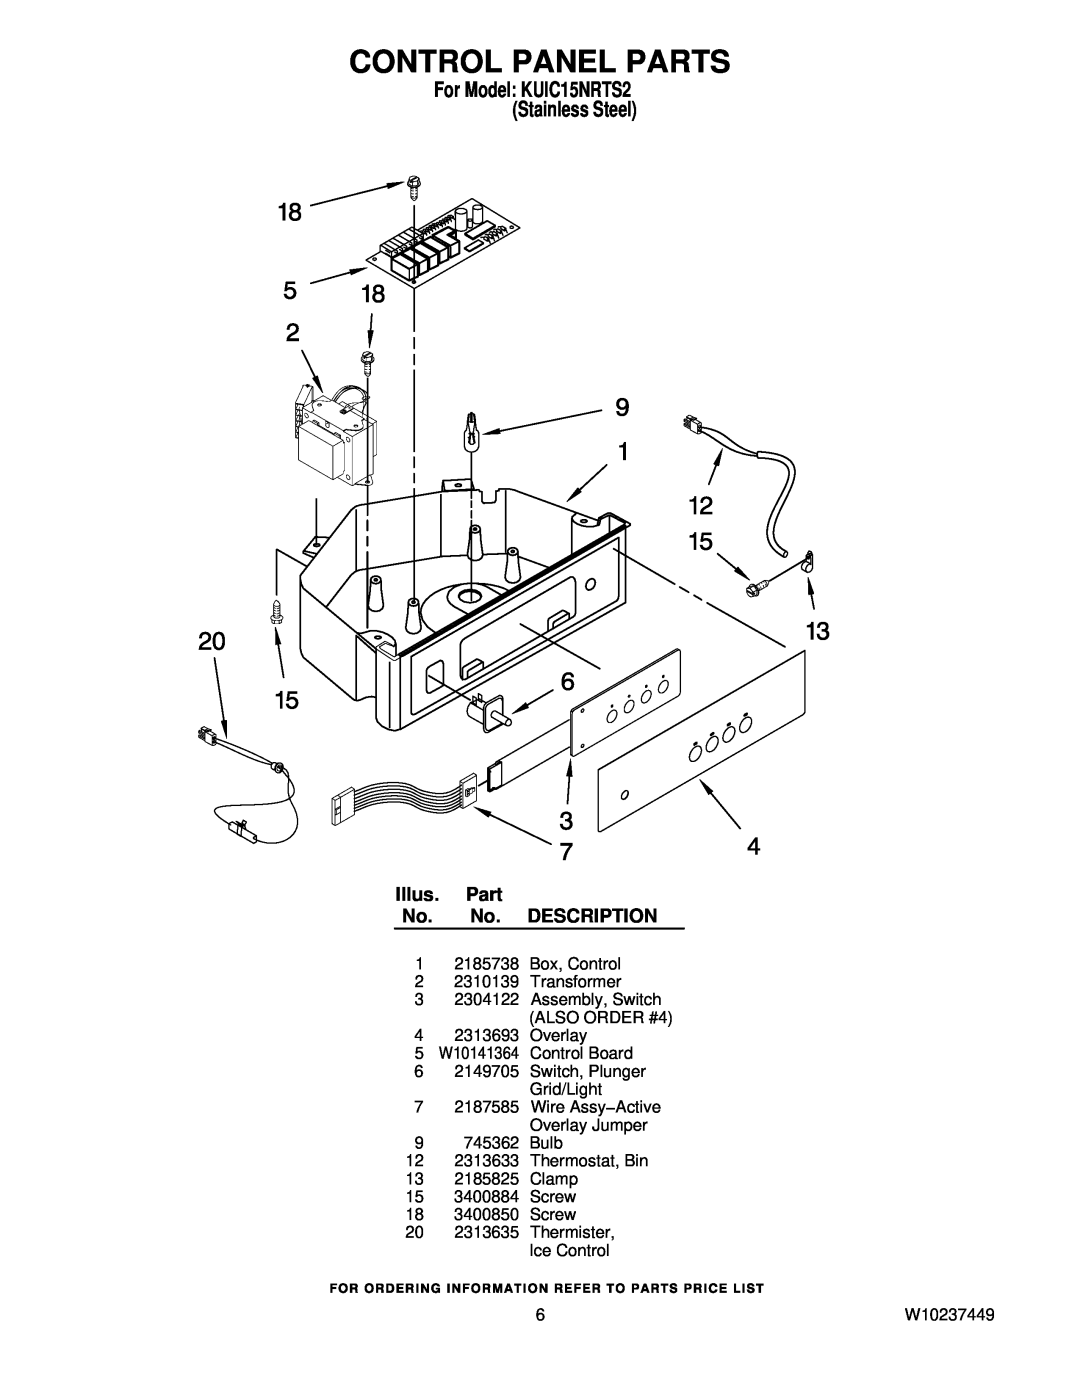 KitchenAid manual Control Panel Parts, For Model KUIC15NRTS2 Stainless Steel, Illus. Part No. No. DESCRIPTION 